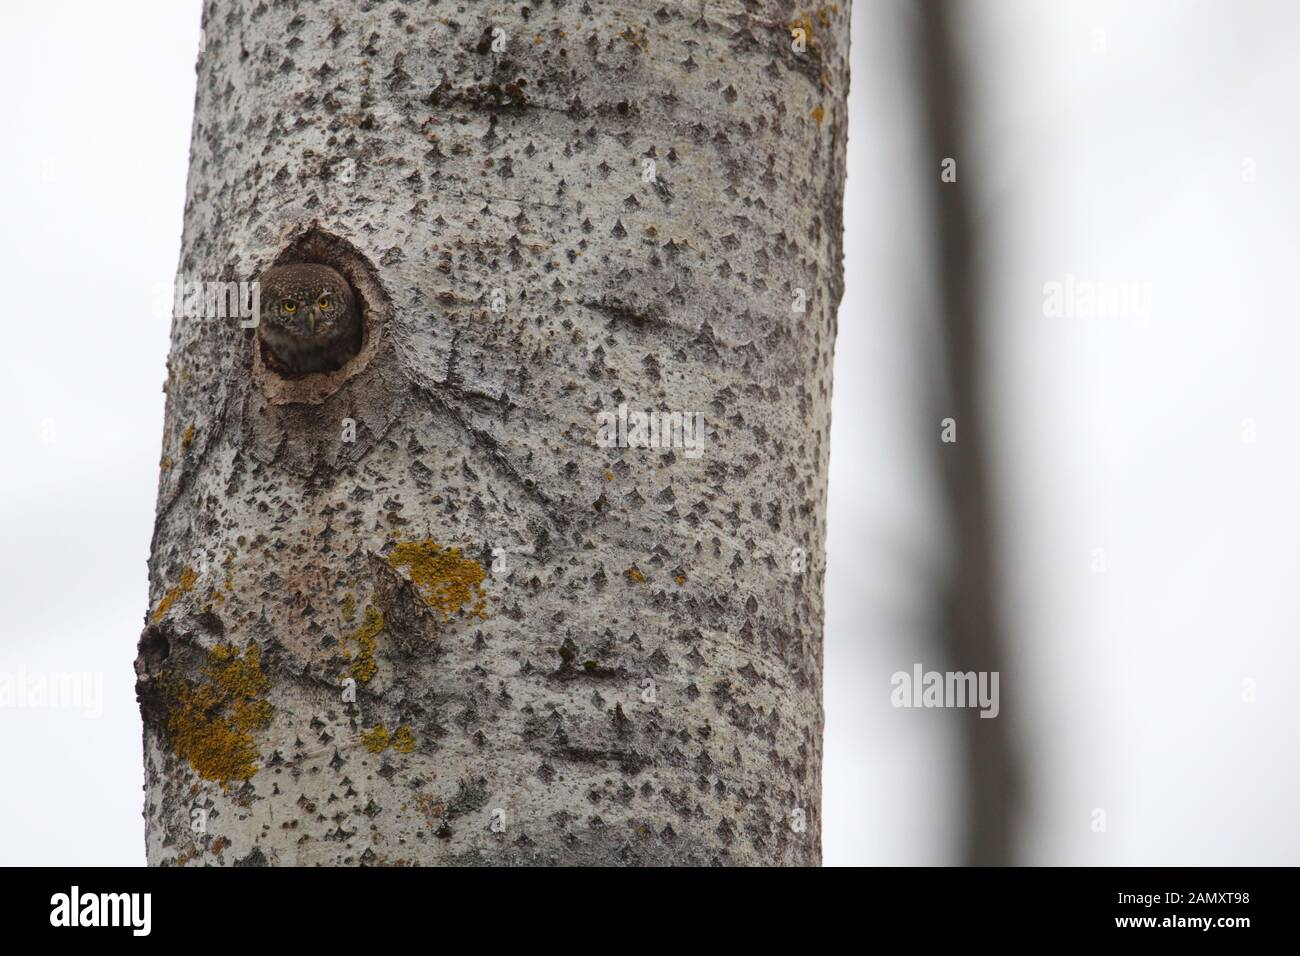 Pygmy Owl (Glaucidium passerinum) peeking out of the nest in aspen tree. Europe Stock Photo